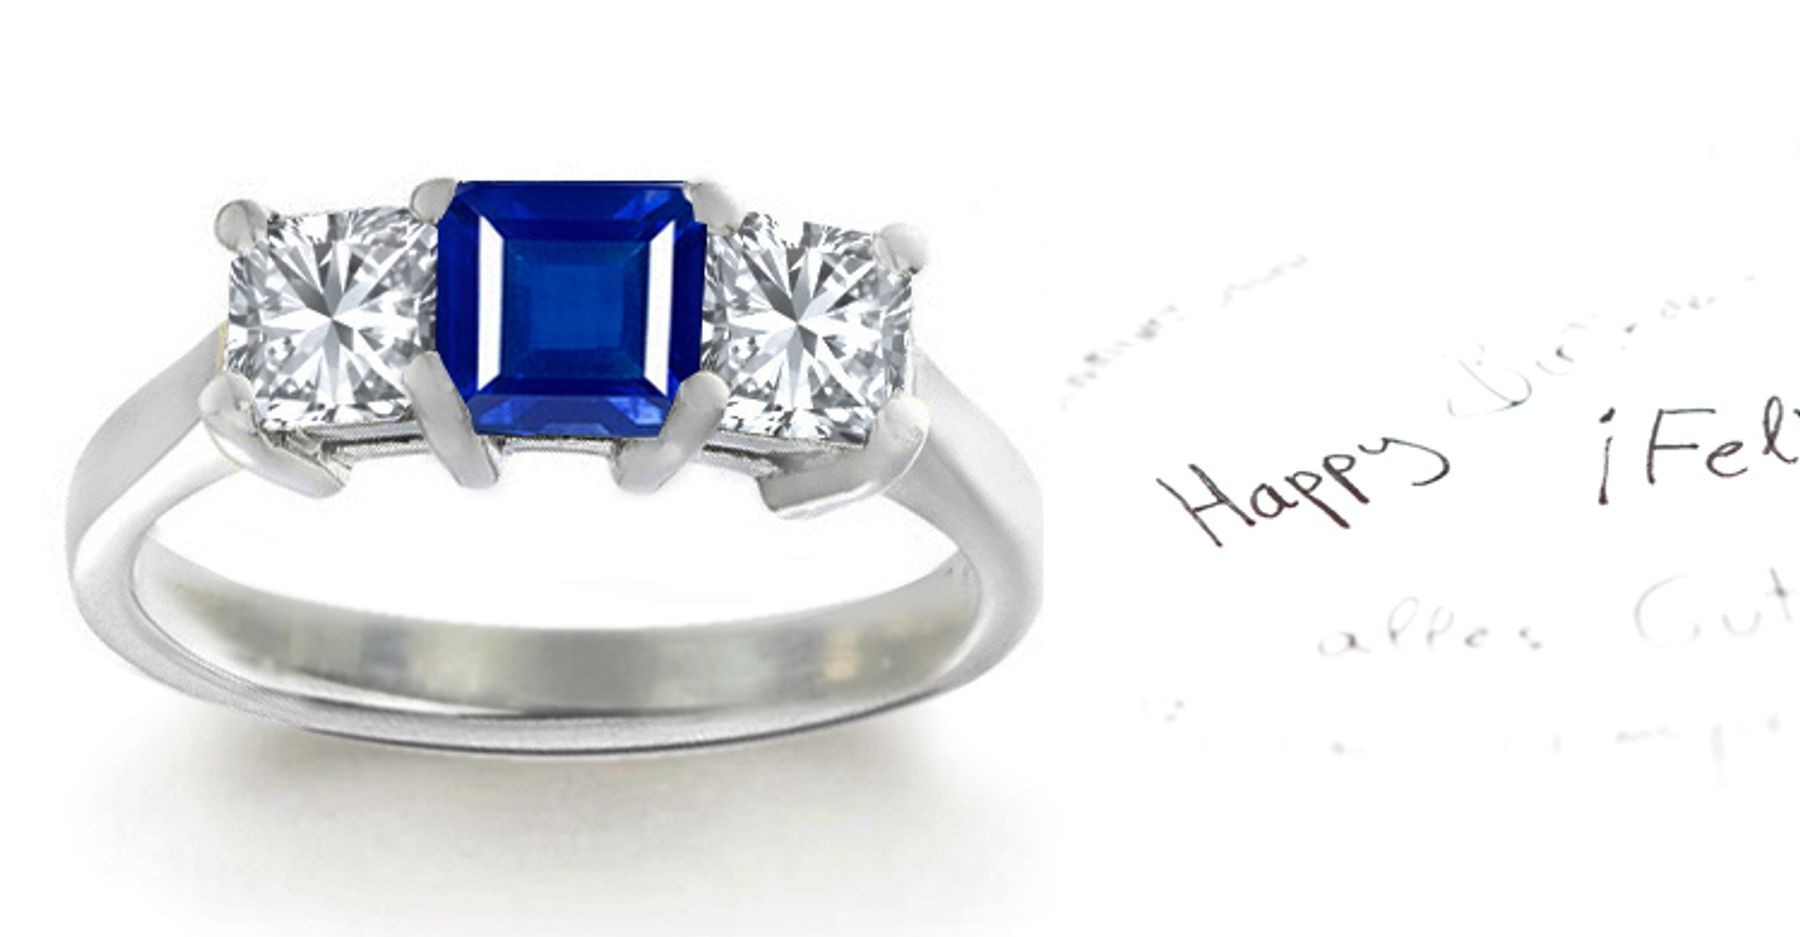 Perfection: Perfect Harmony Sapphire Diamond Ring Set with Square Blue Sapphire & Diamonds